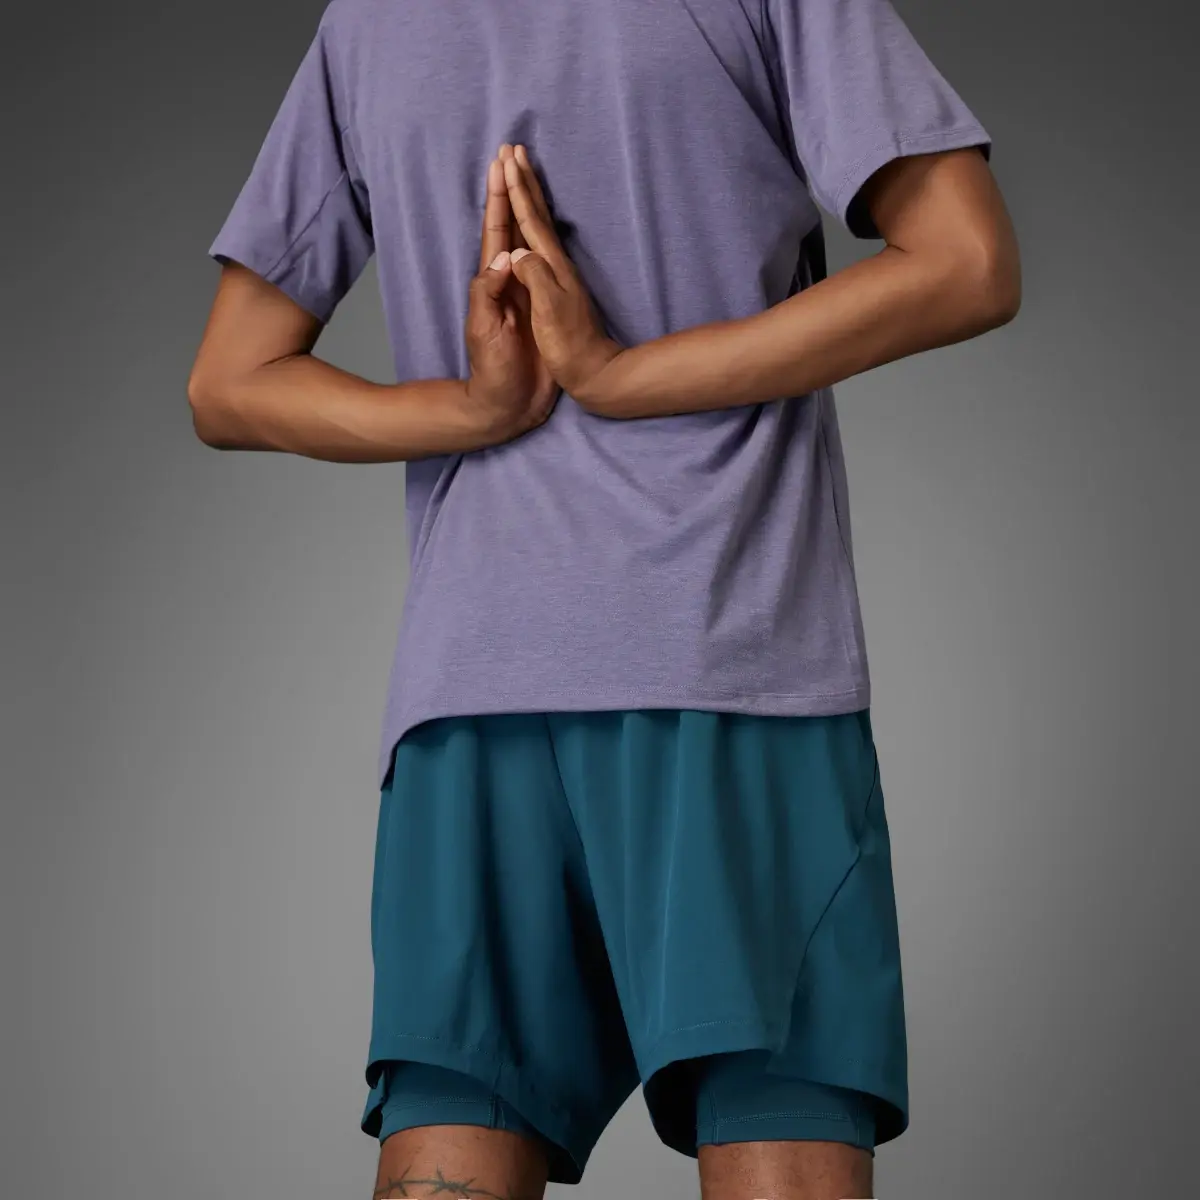 Adidas Yoga Premium Training Two-in-One Shorts. 2